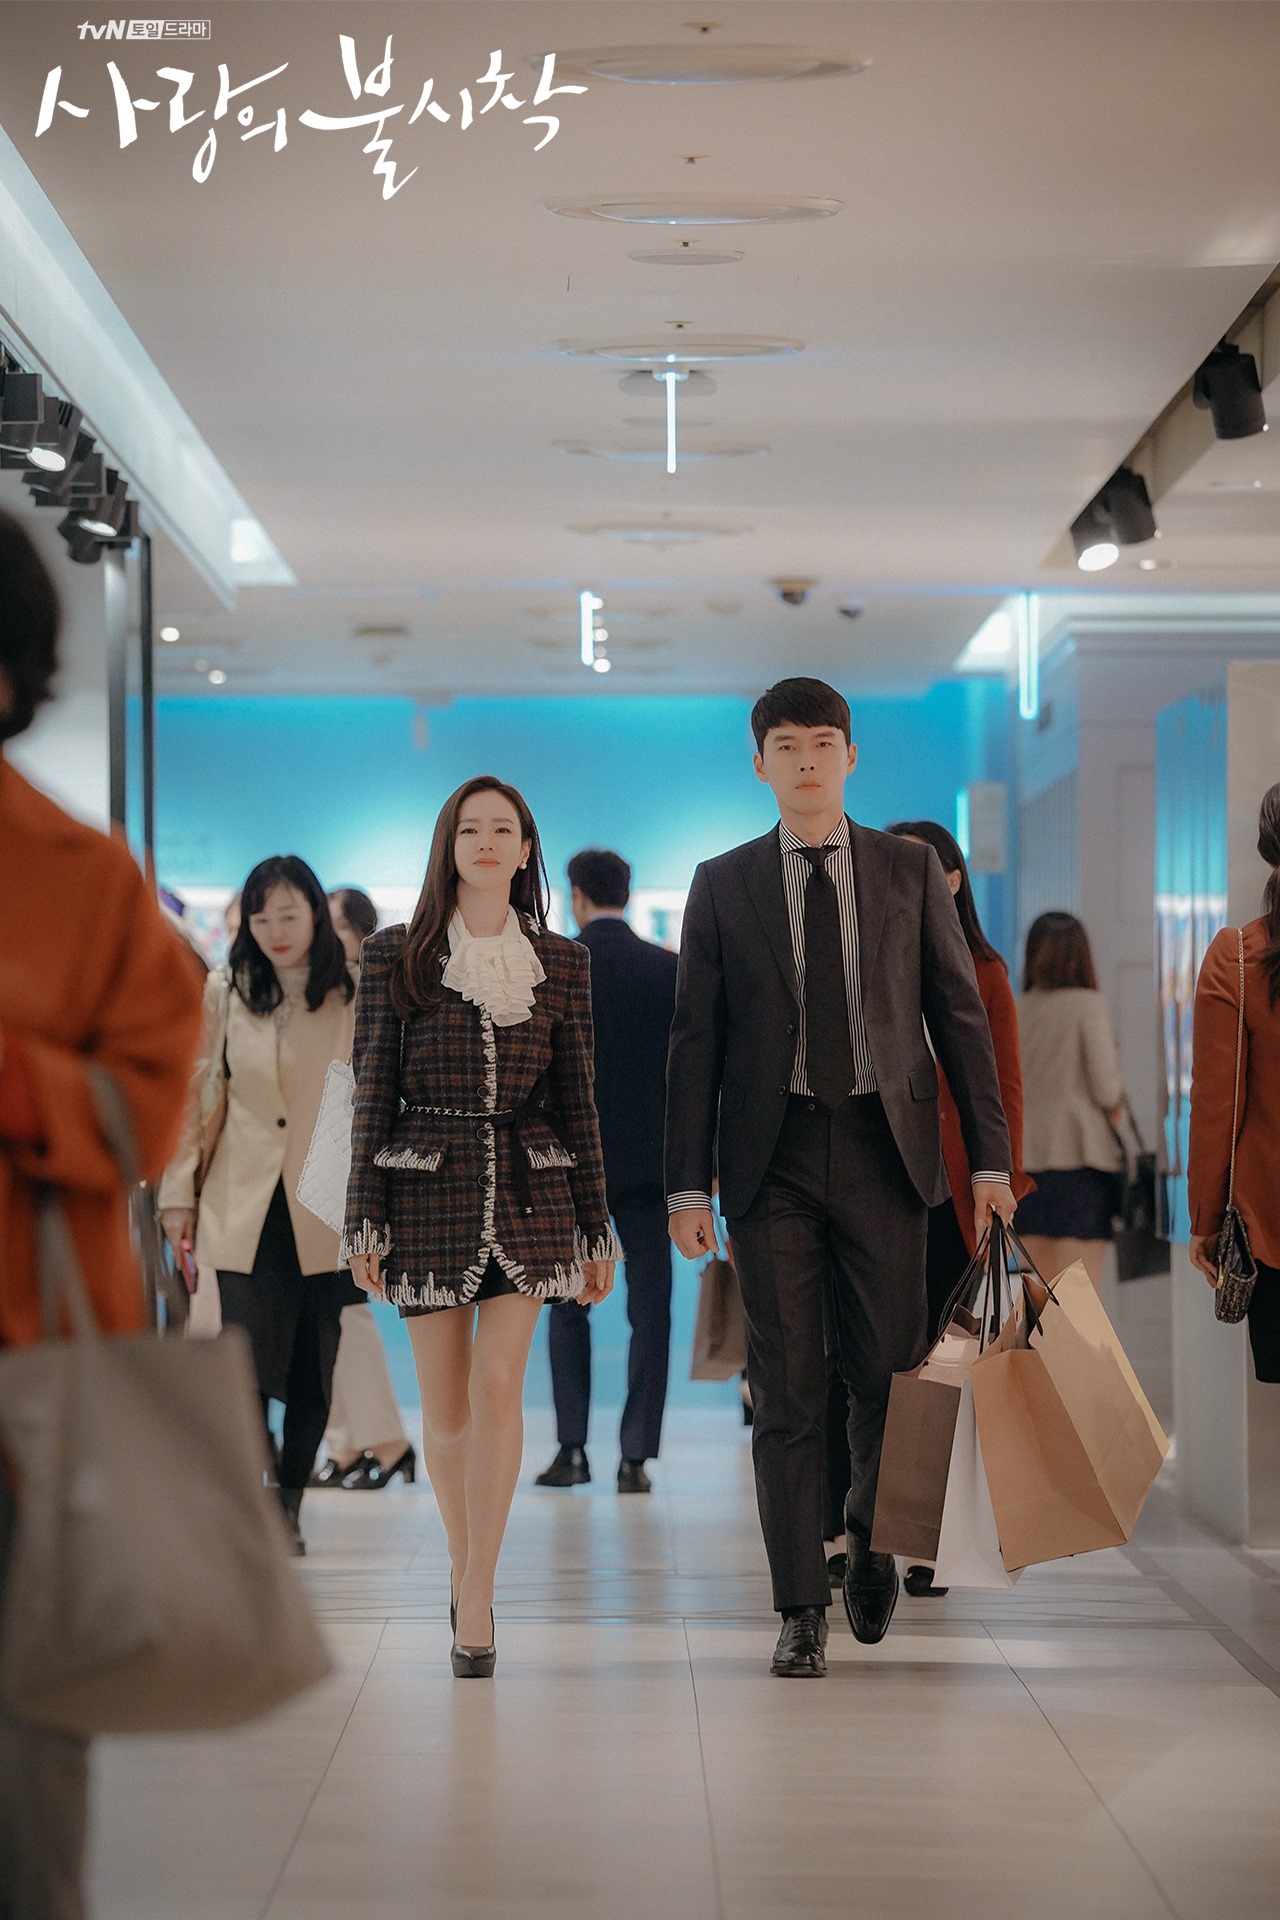 Secret Garden Shopping Scene Gets Gender Swapped As Hyun Bin